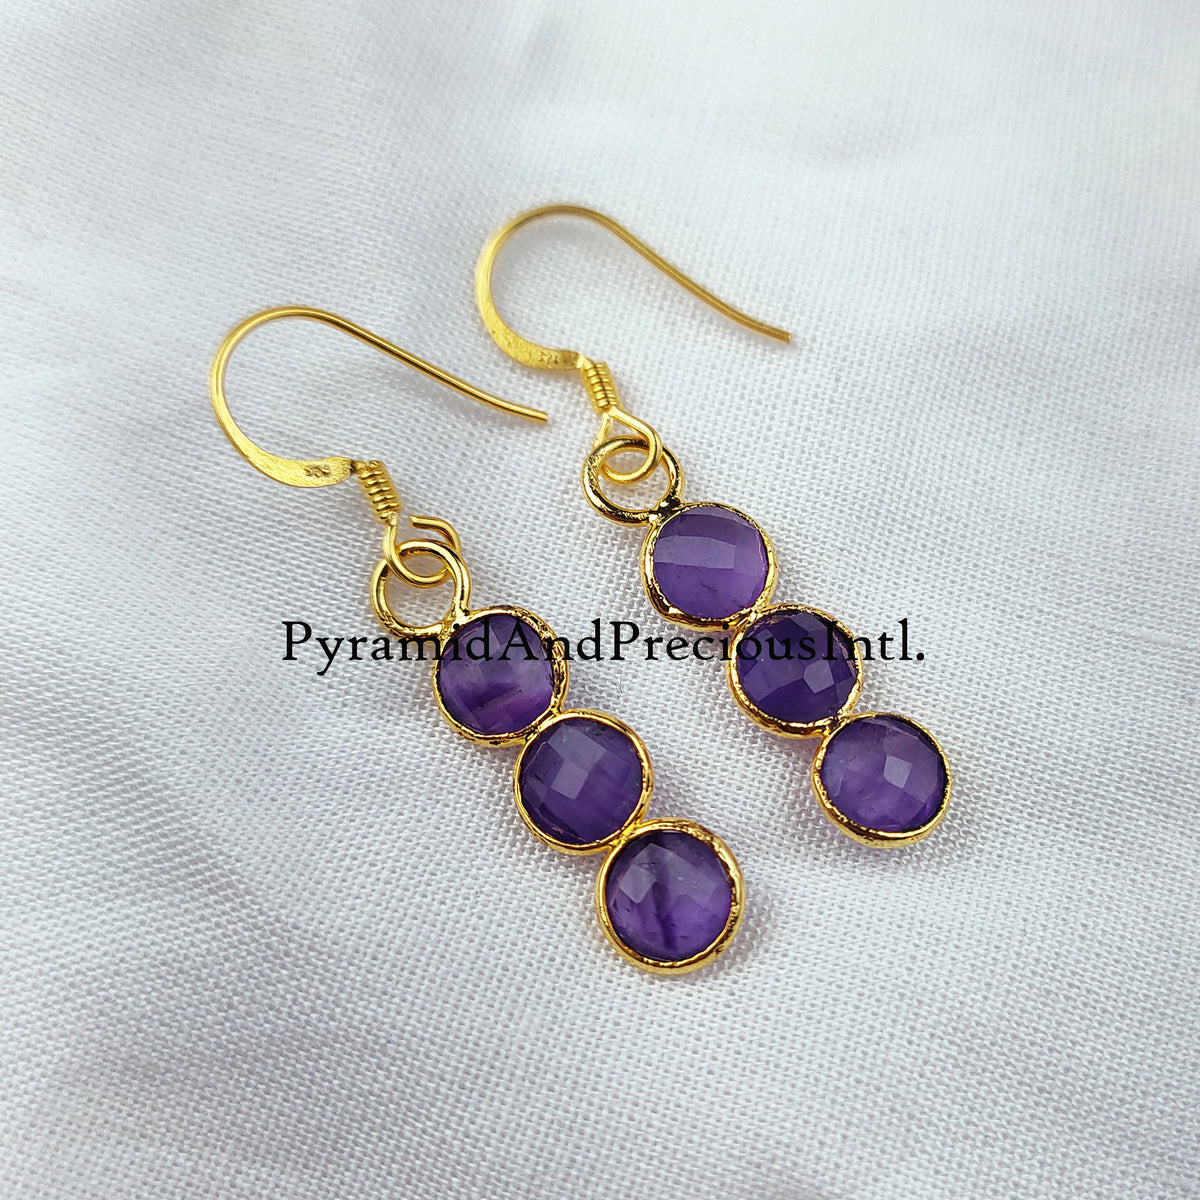 Amethyst earrings, February Birthstone Gift, February Birthstone earrings, Gold Plated Earring